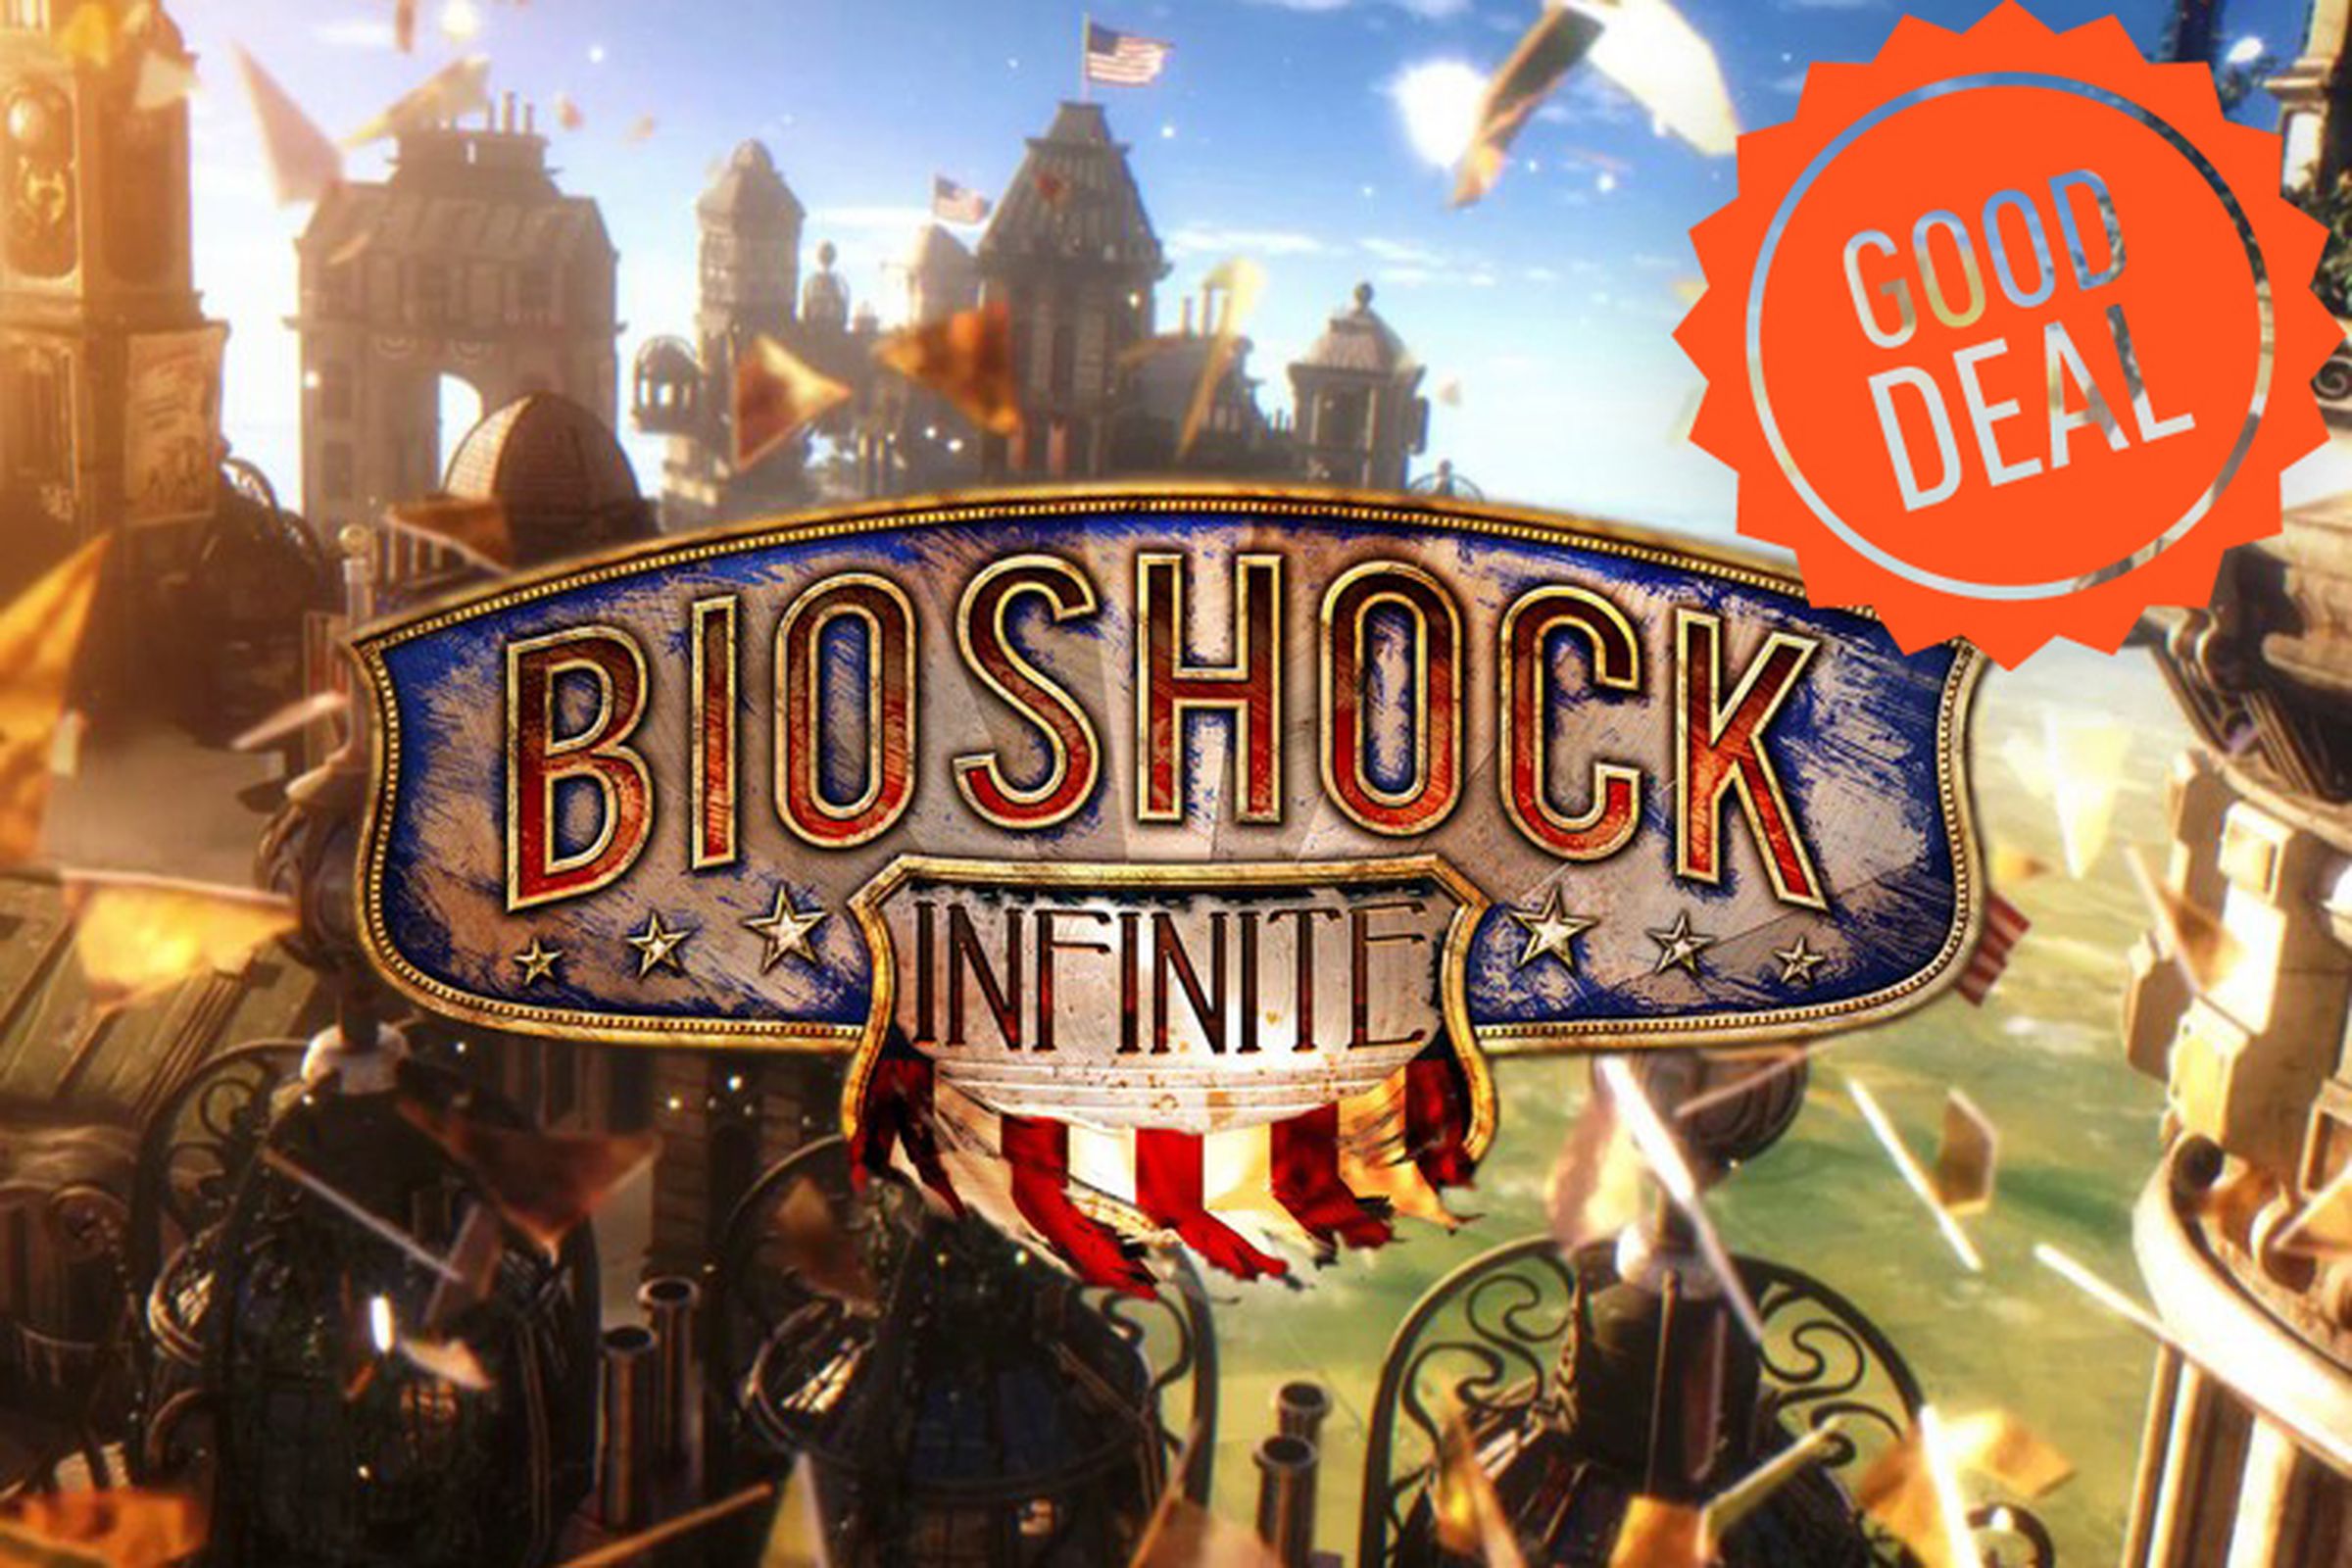 Bioshock Infinite Good Deal